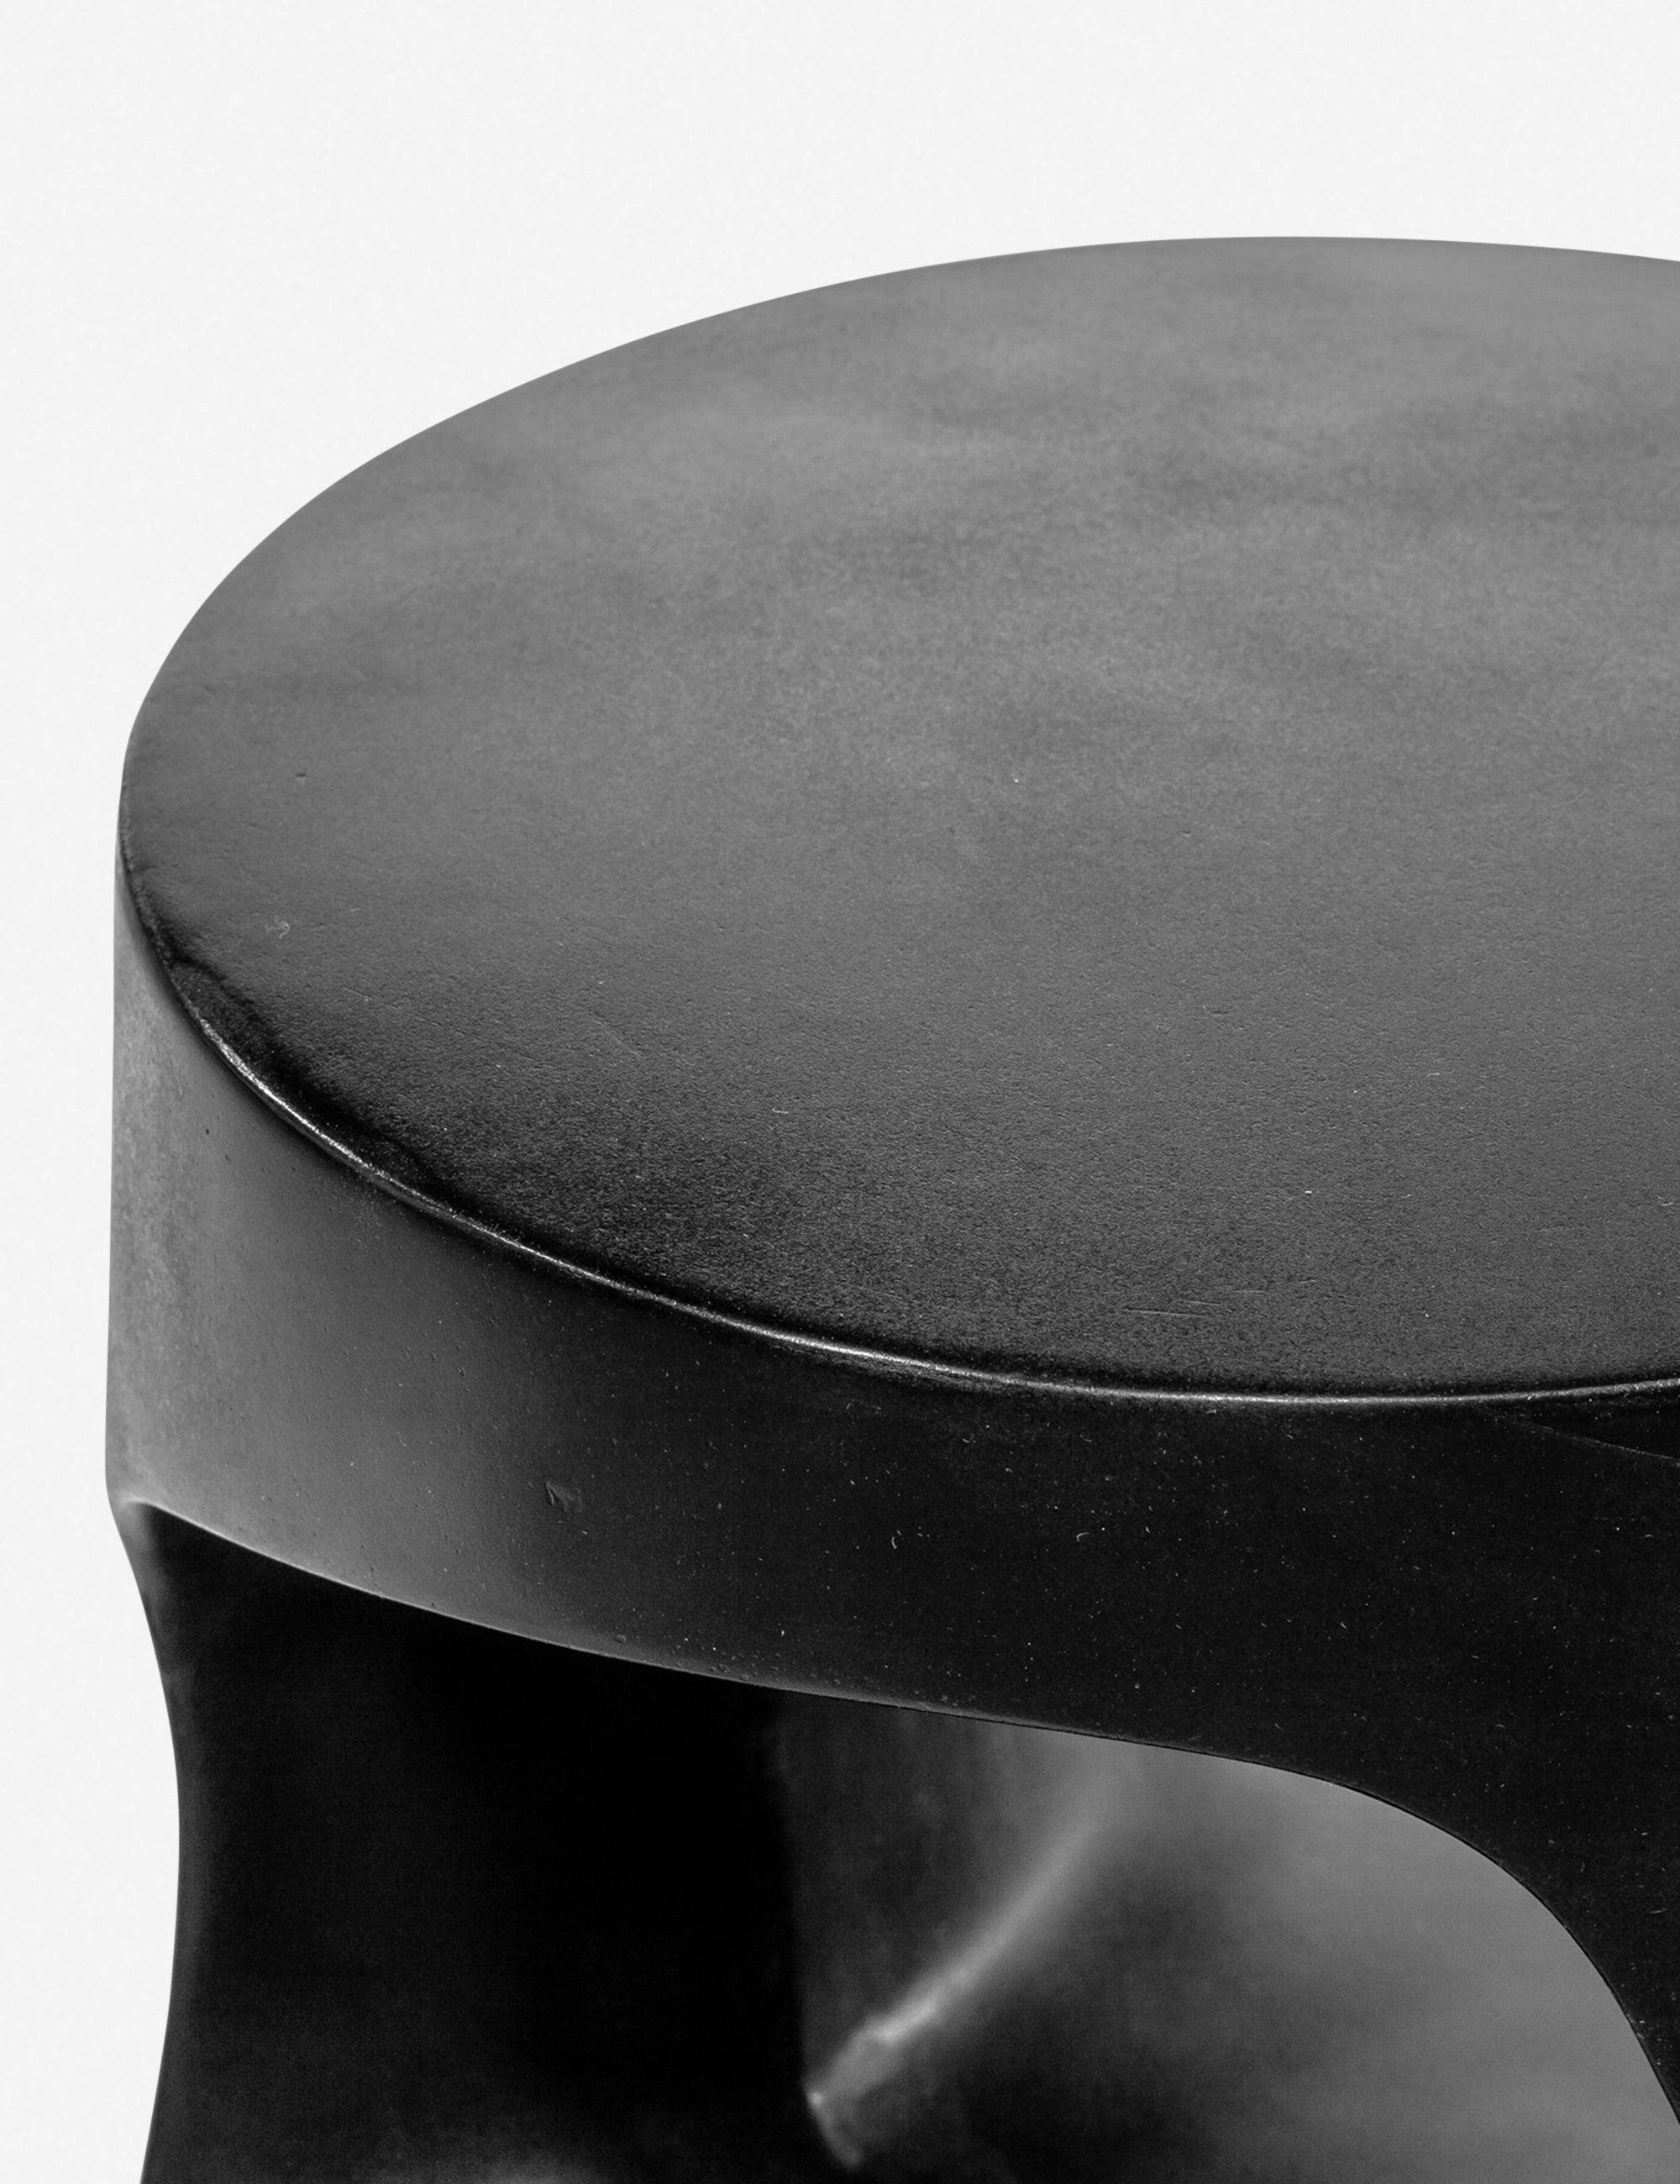 Rothko Contemporary Black Concrete Sculptural Stool 17.75"